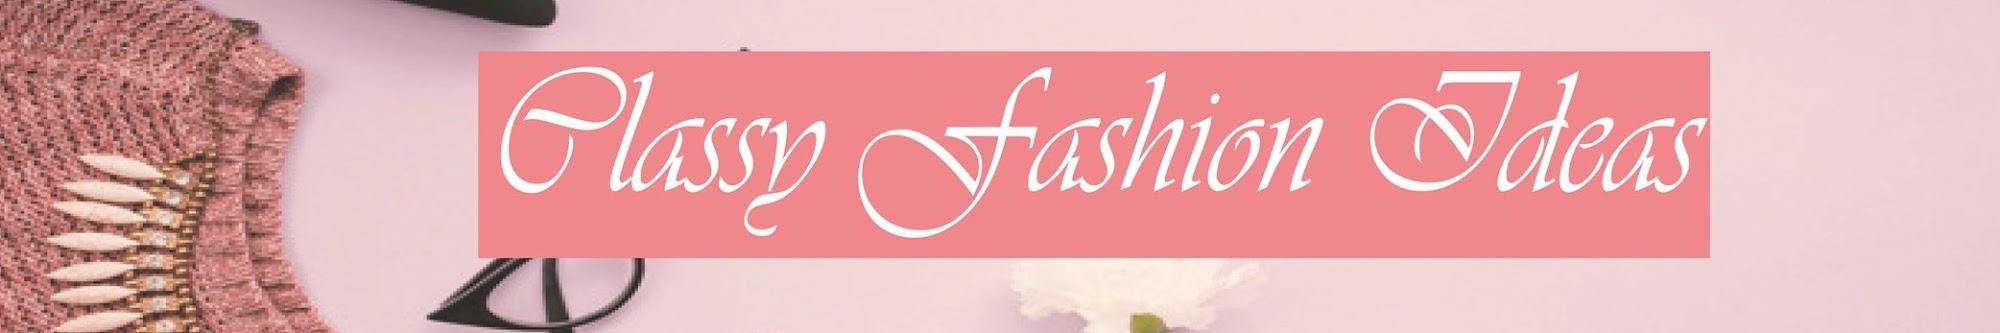 Classy Fashion Ideas by Ushna